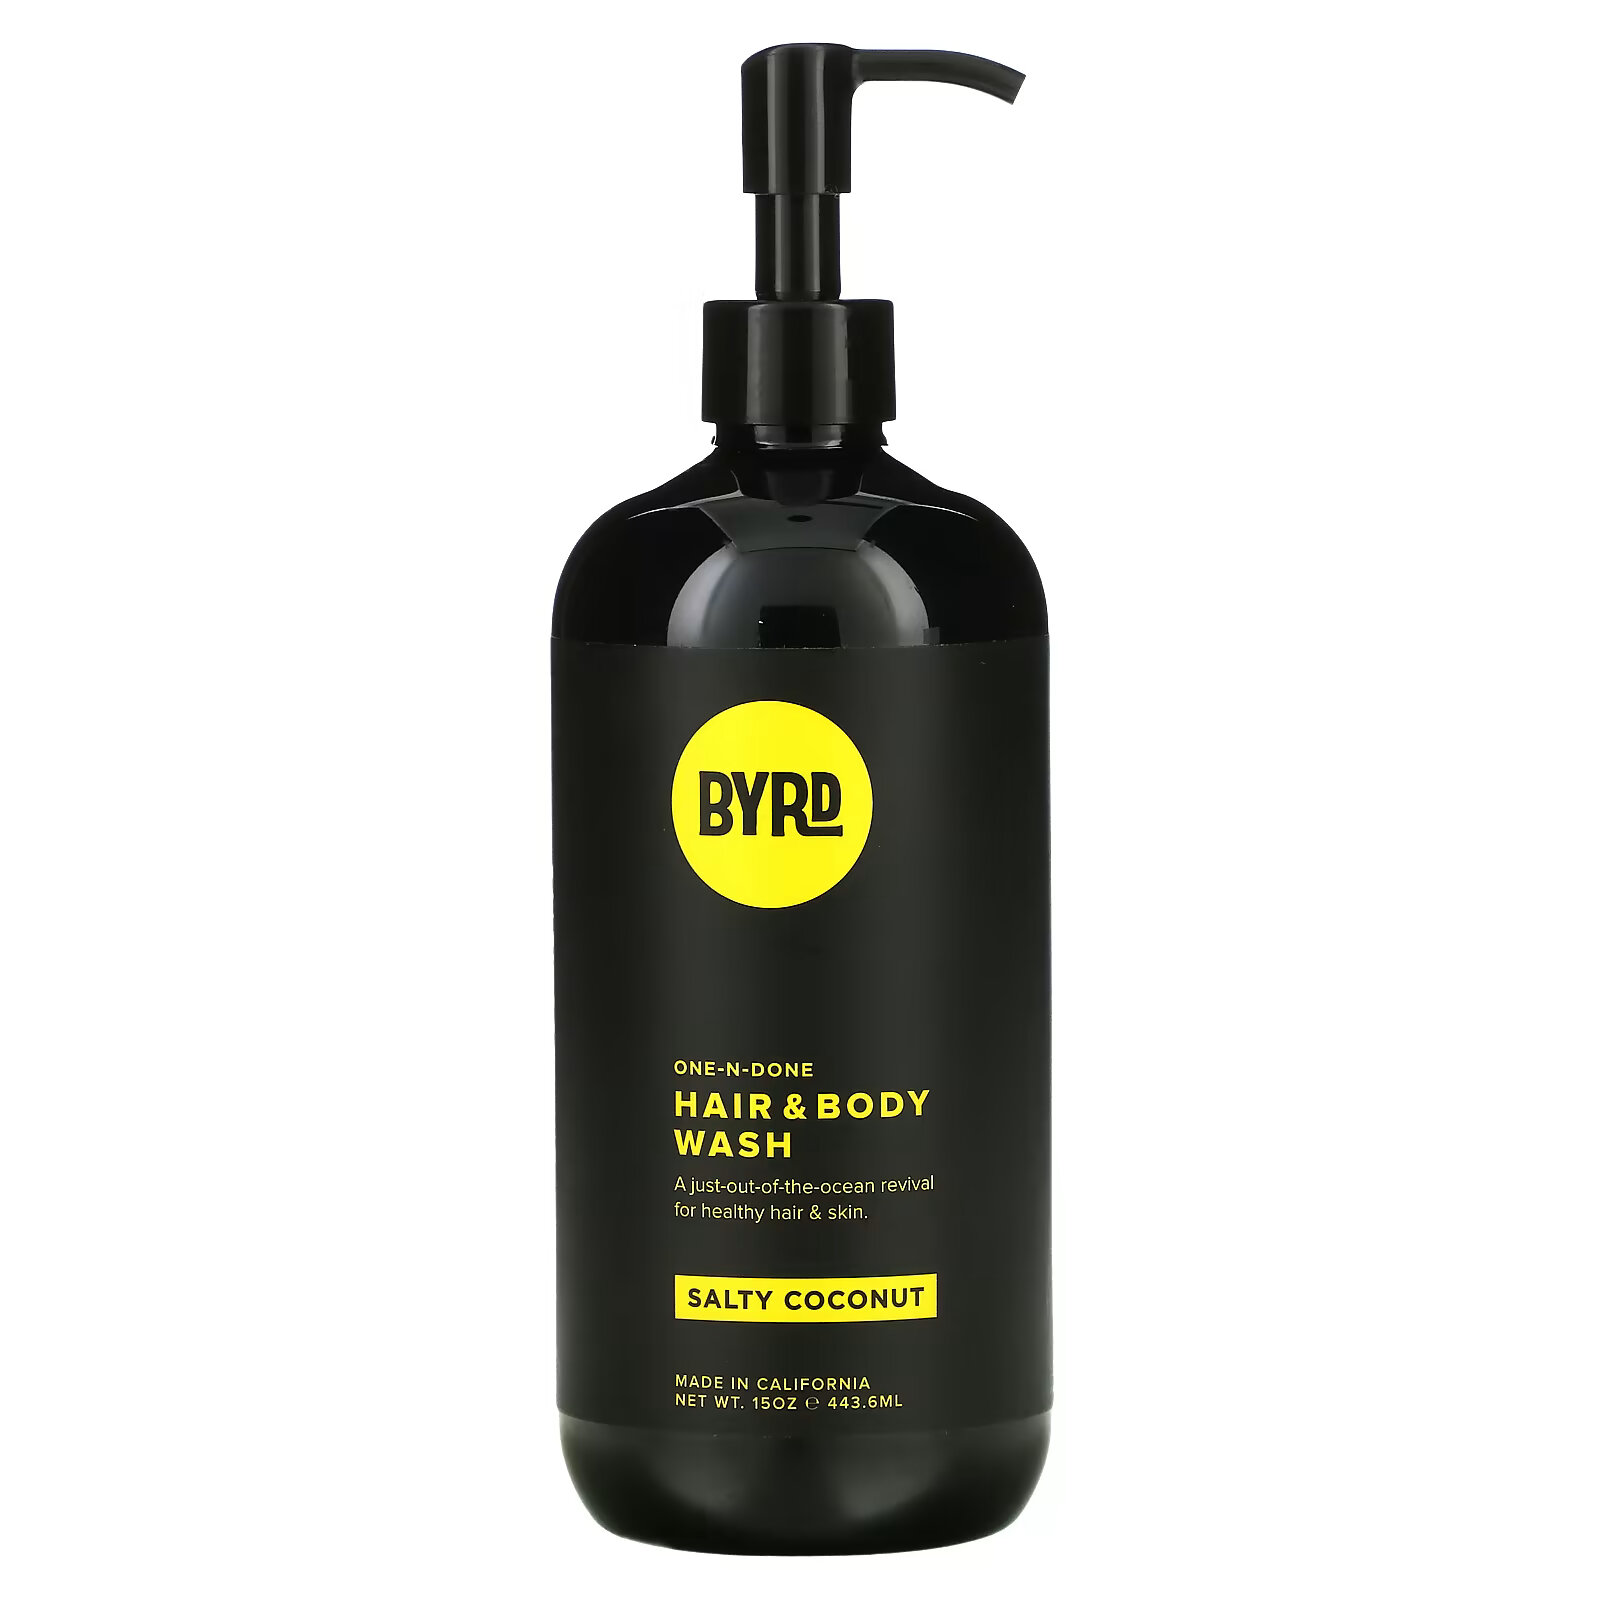 Byrd Hairdo Products, One-N-Done, гель для душа и волос, с соленым кокосом, 443,6 мл (15 унций) кондиционер byrd hairdo products для волос